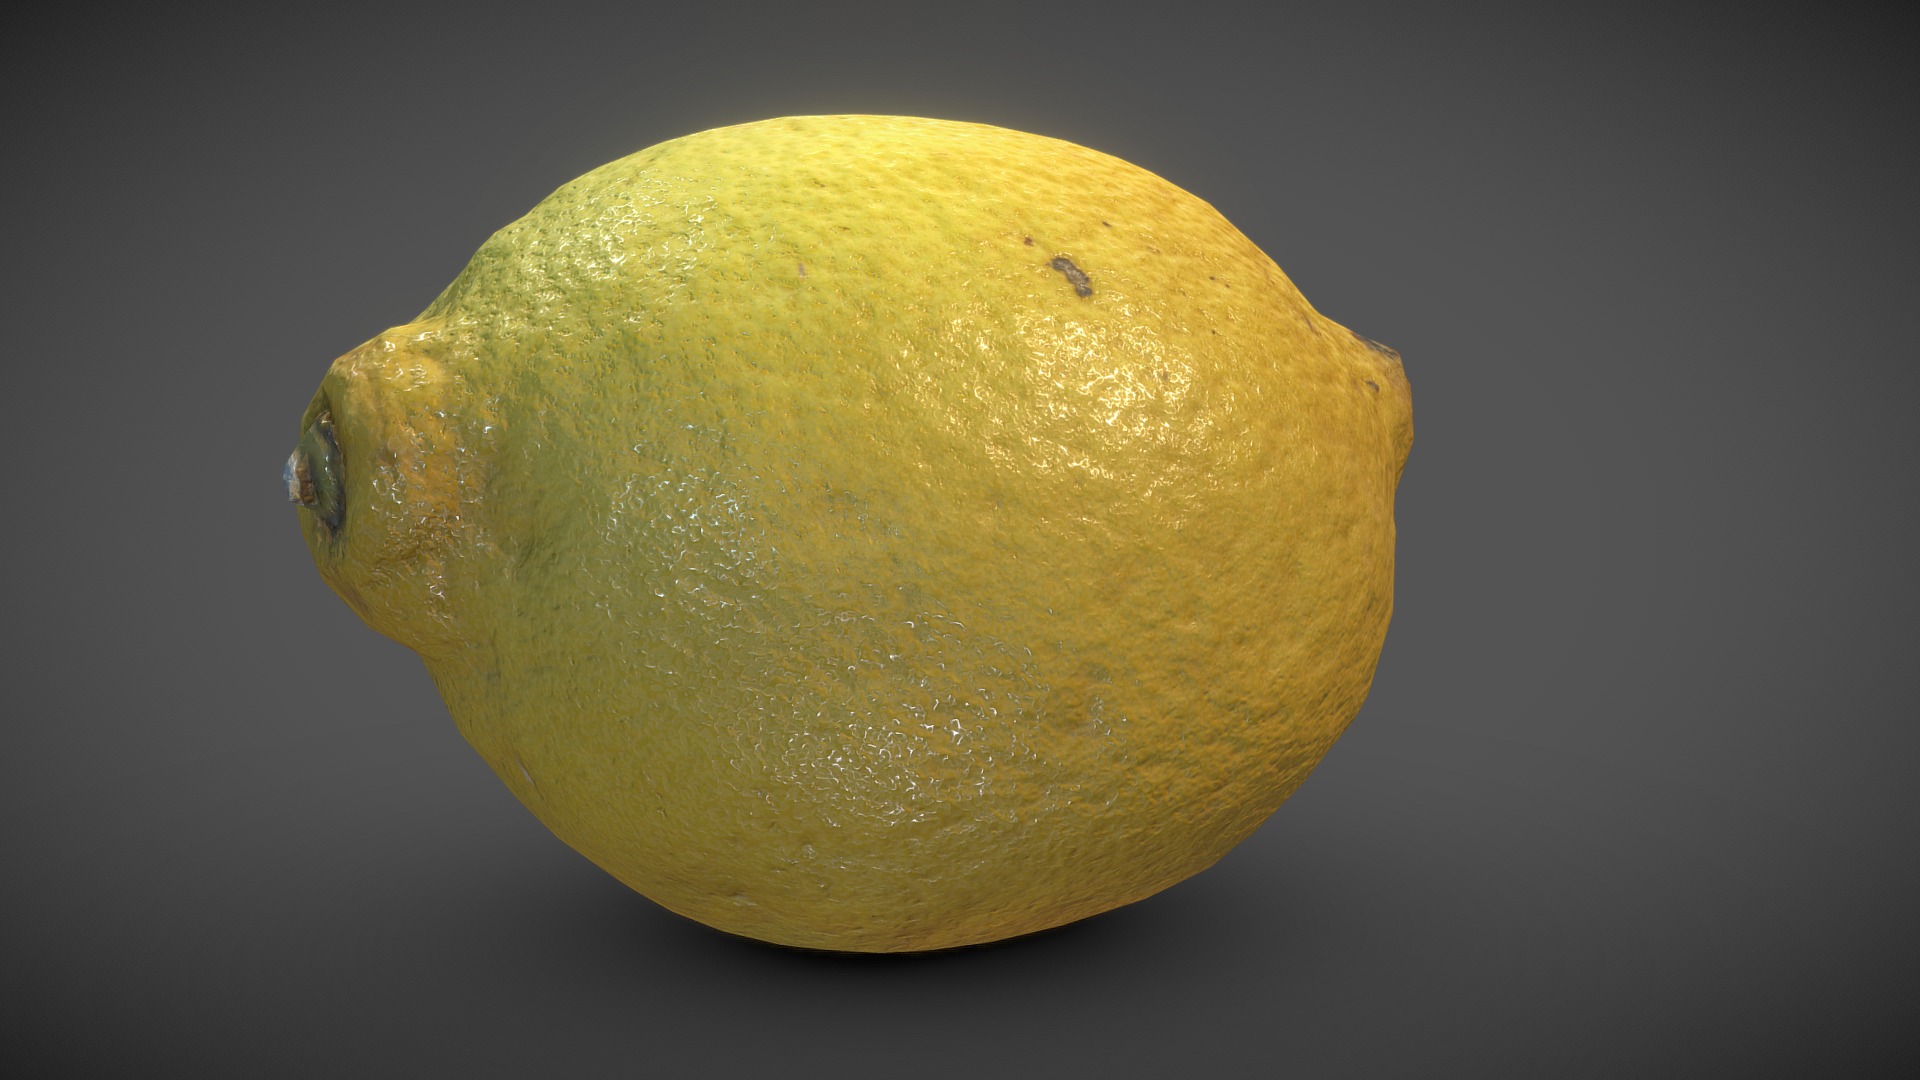 3D model Photoscaned Lemon - This is a 3D model of the Photoscaned Lemon. The 3D model is about a yellow lemon on a black background.